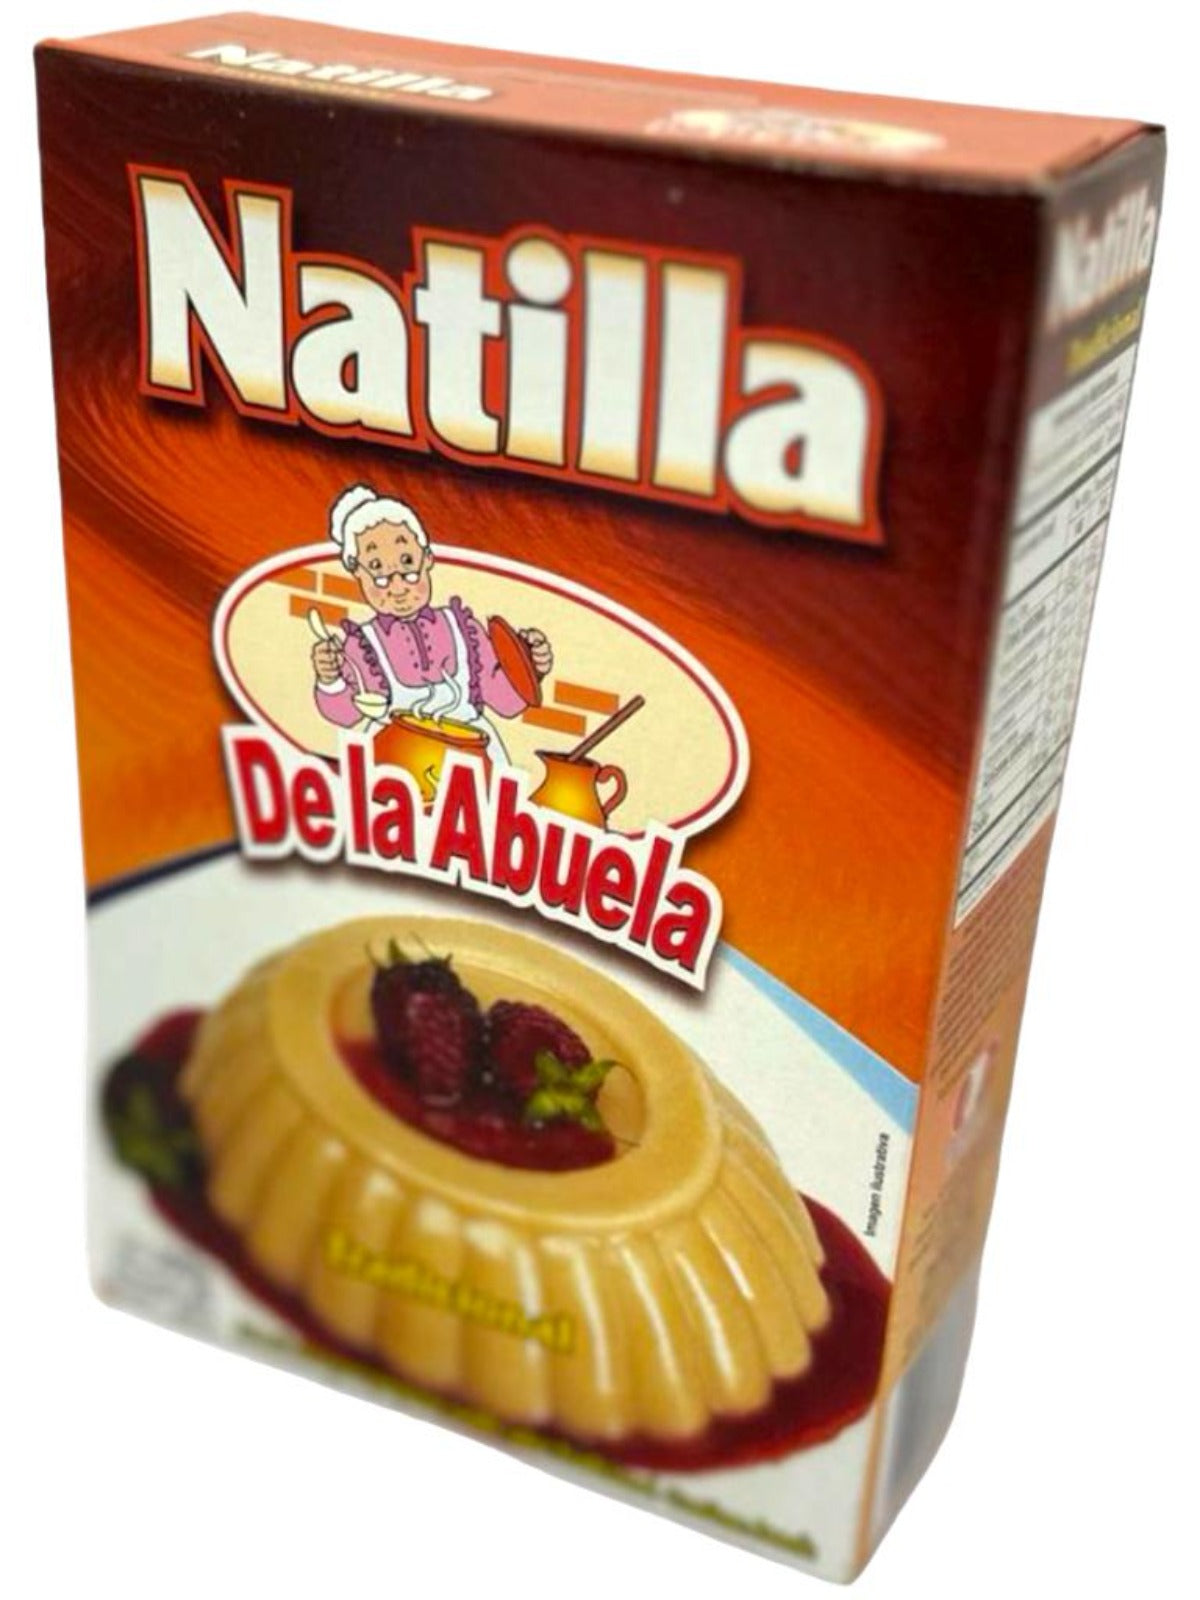 De la Abuela Colombian Natilla 300g ea 4 Pack 1200g Total